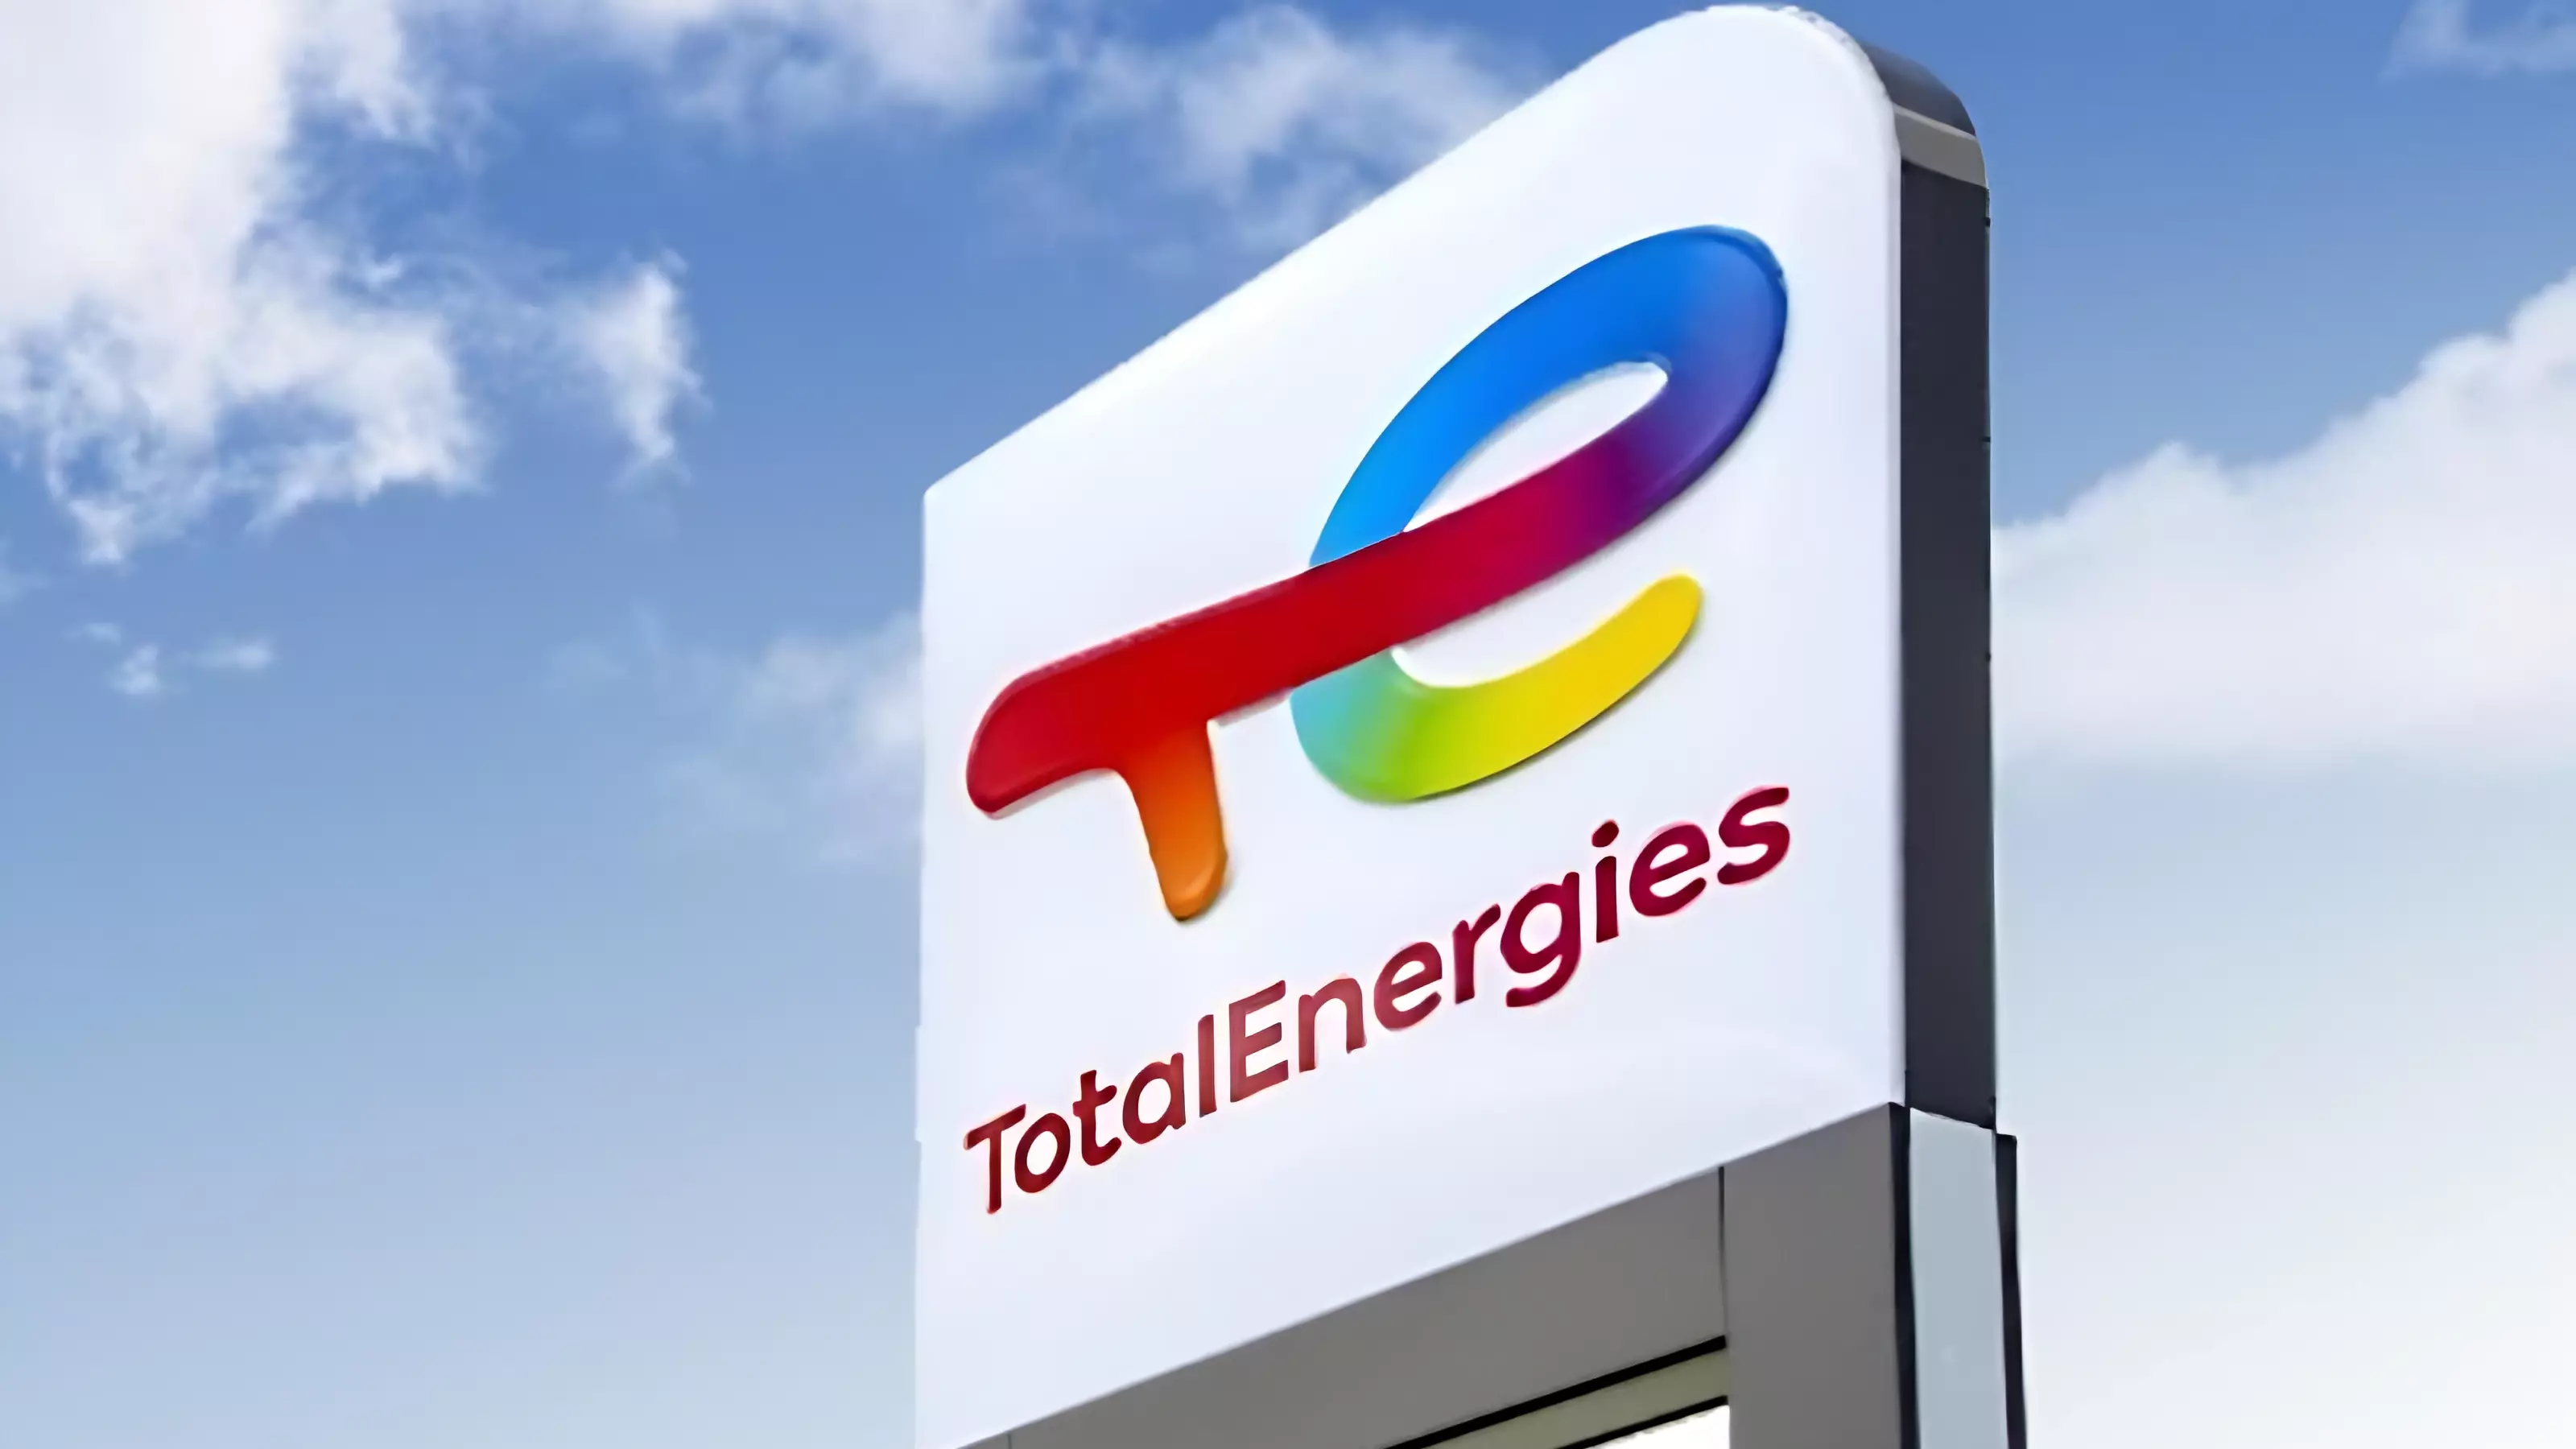 TotalEnergies планирует наращивать добычу нефти и газа на 2-3% в год